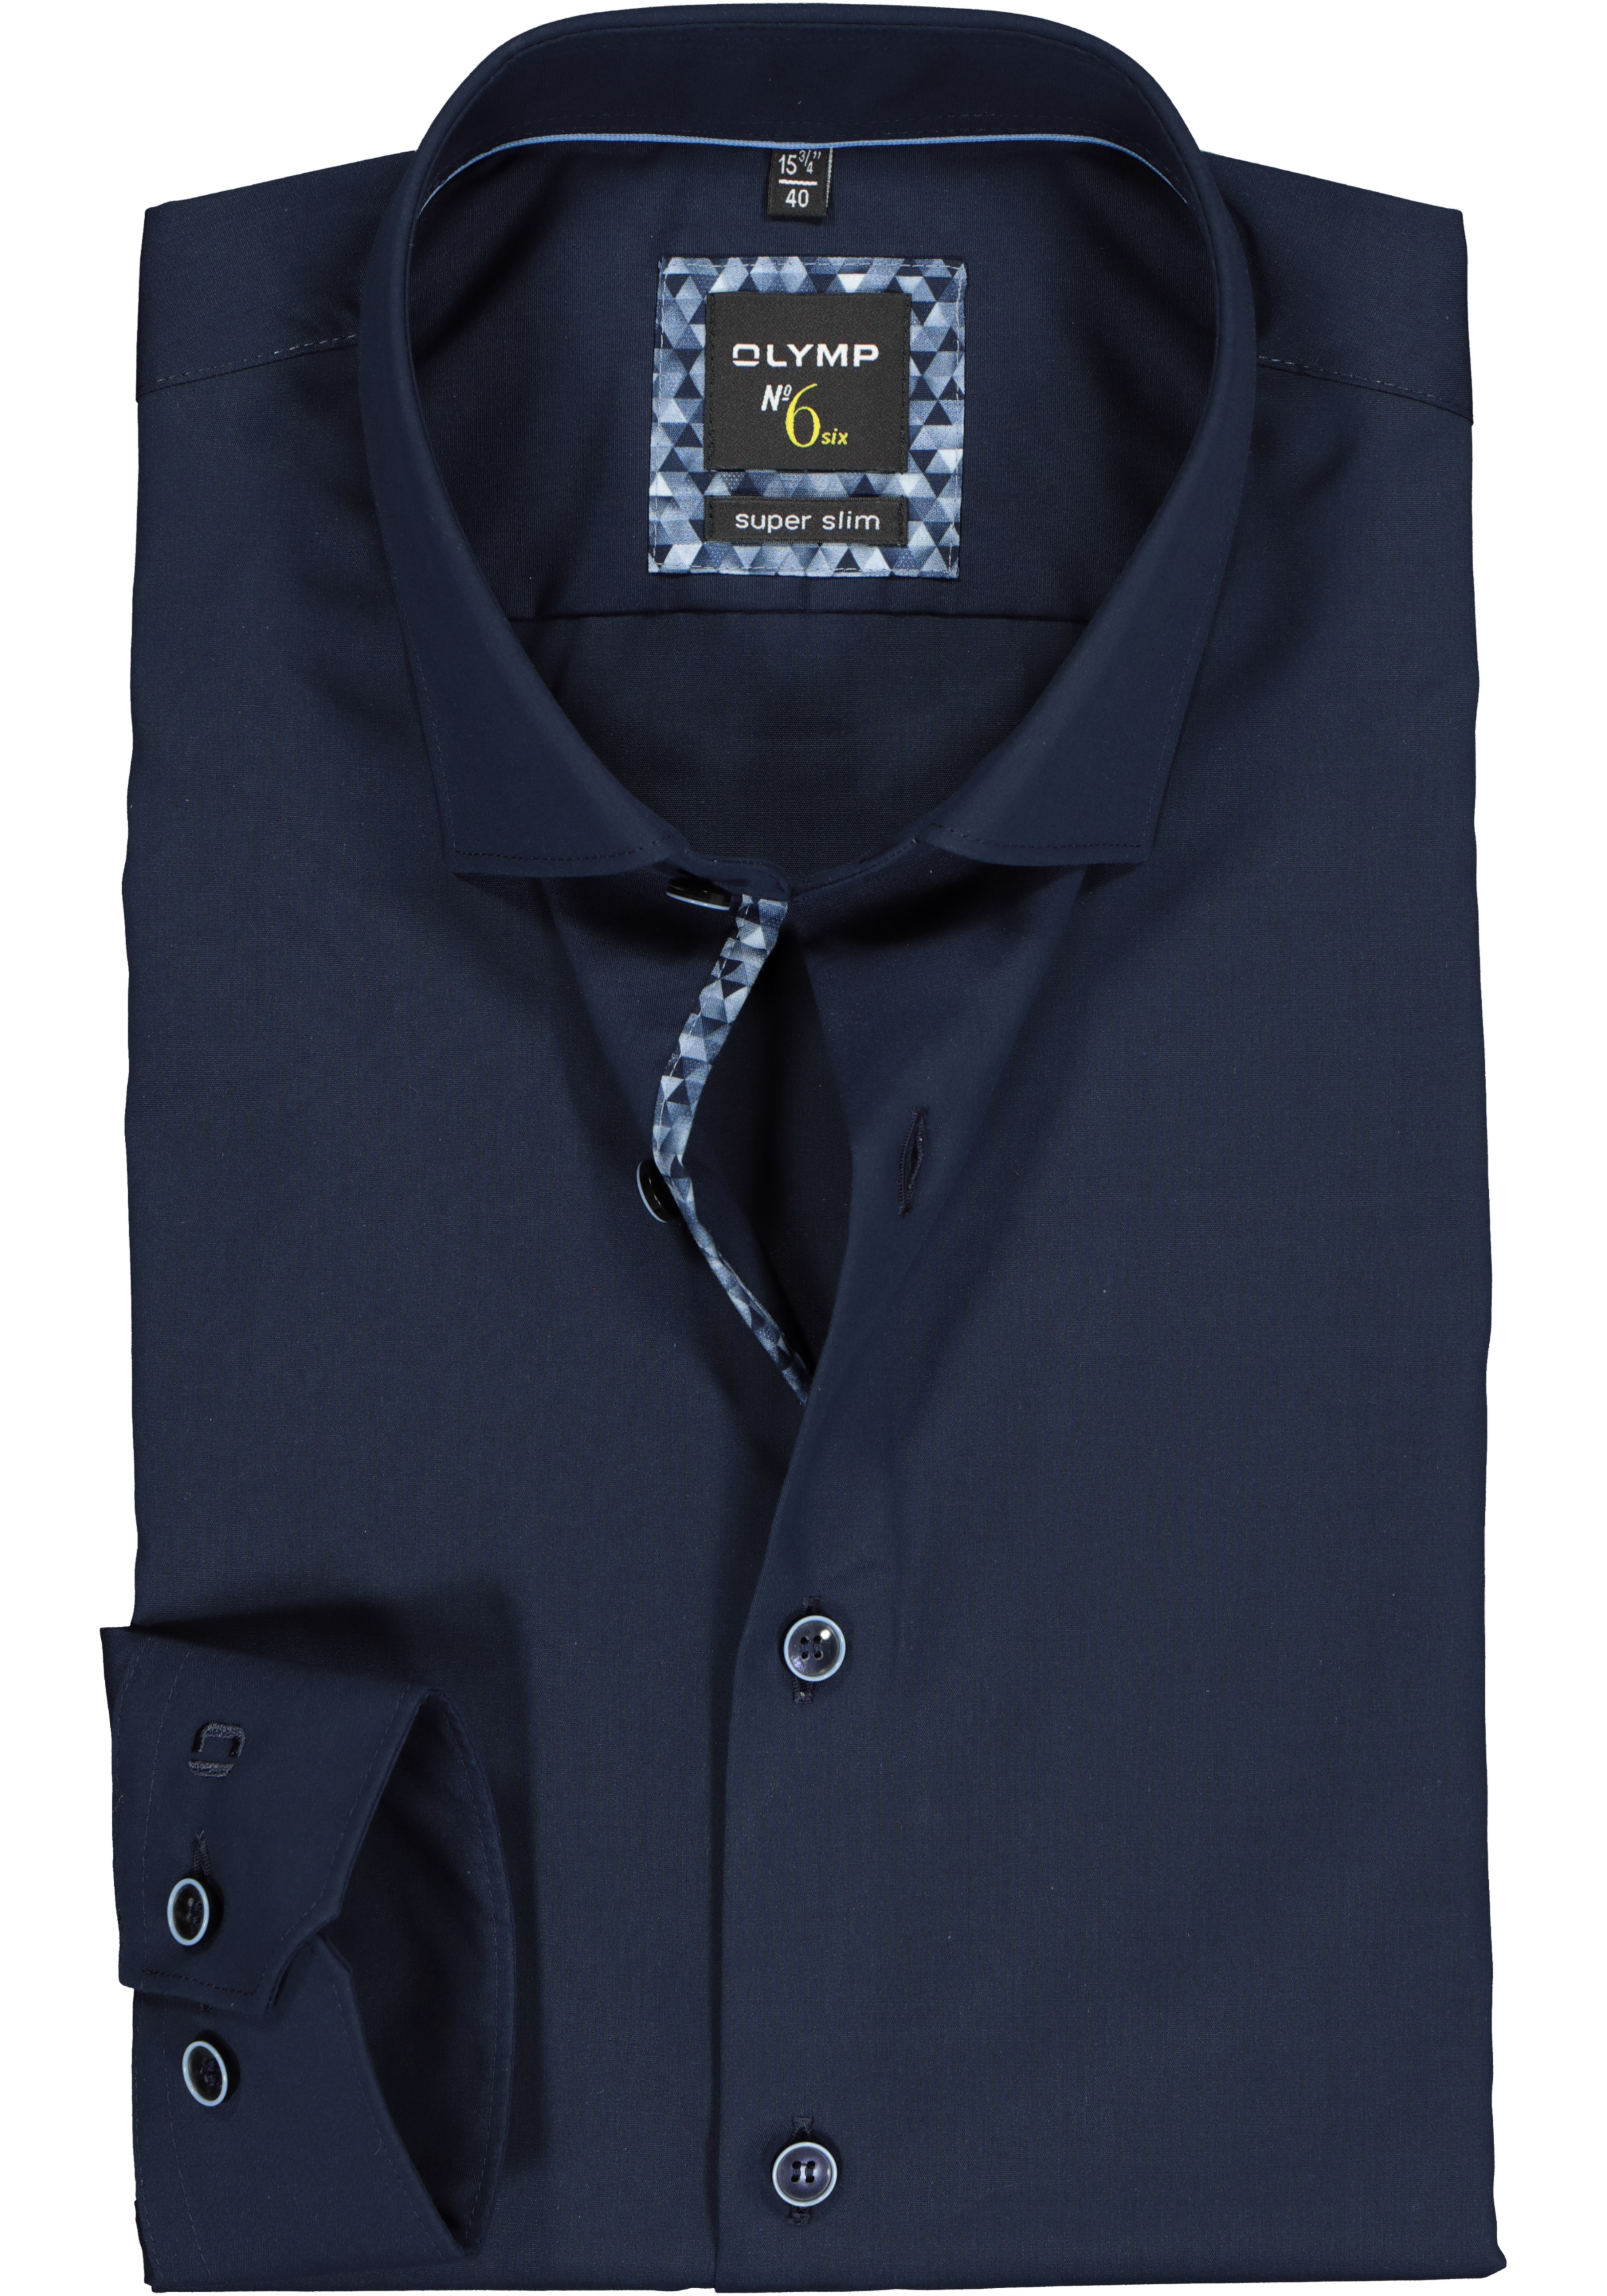 OLYMP No. 6 Six super slim fit overhemd, donkerblauw poplin (contrast)